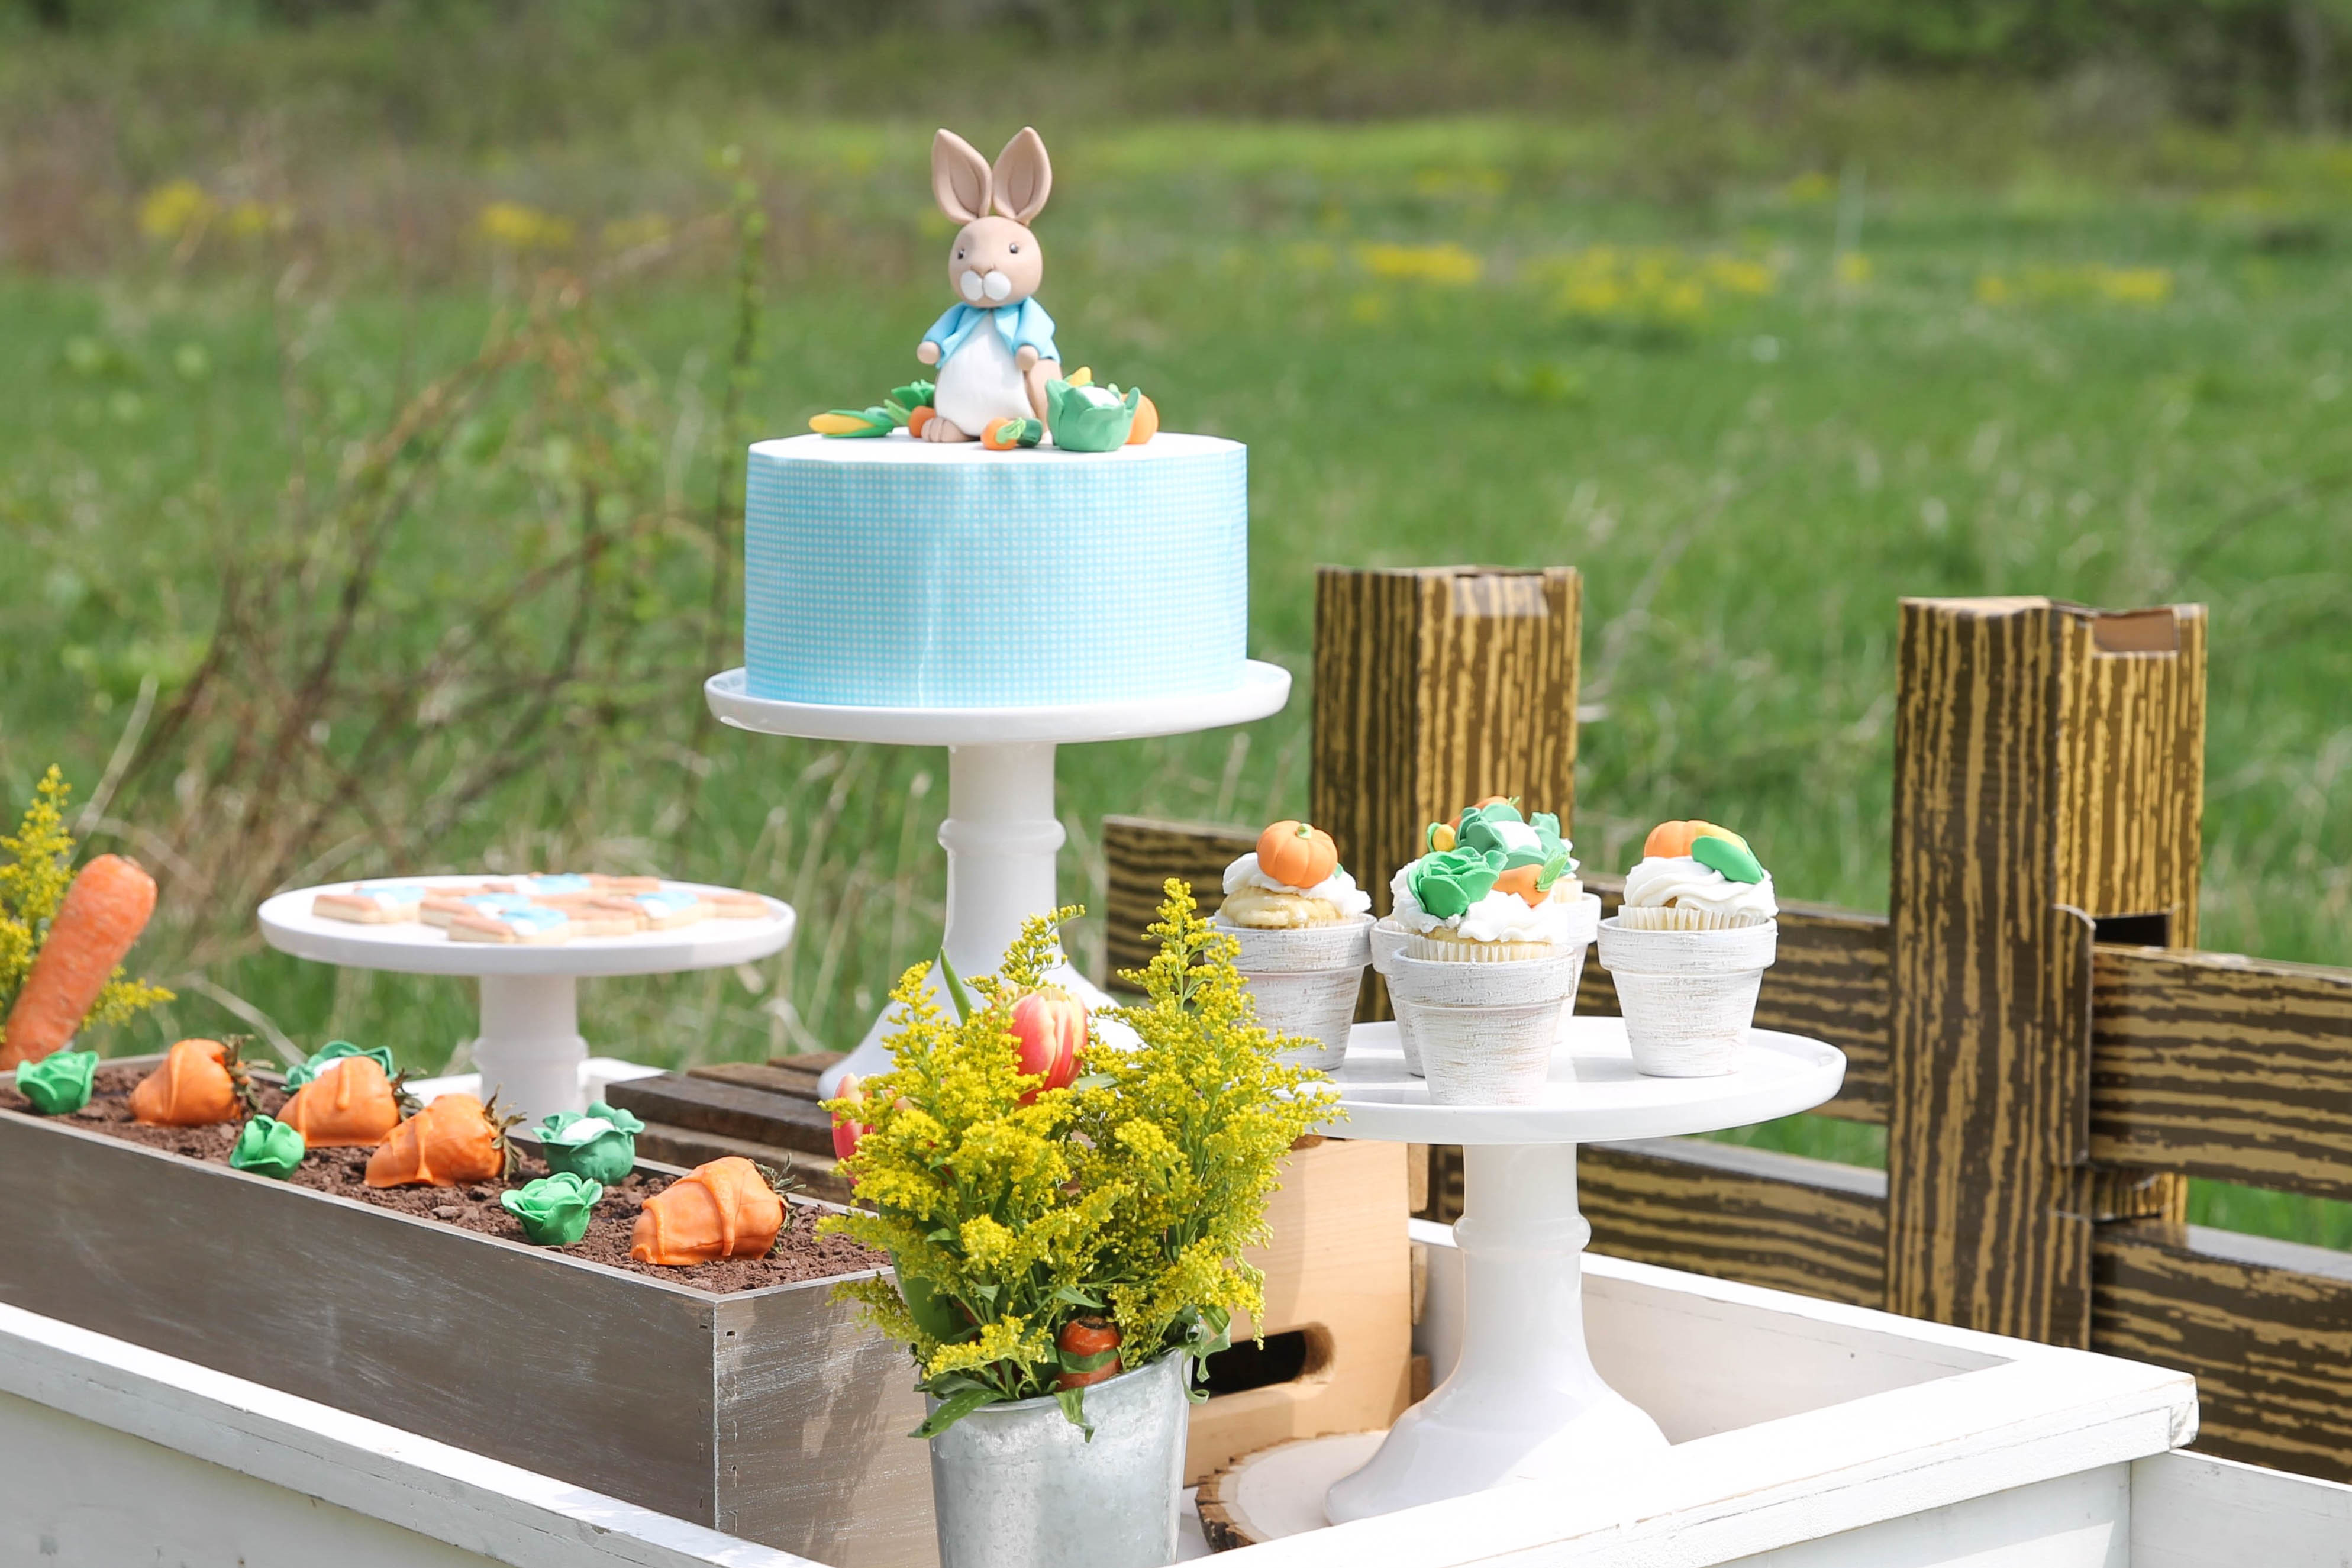 fabric Peter Rabbit baby shower decoration D152 Shabby Chic Peter Rabbit cake topper